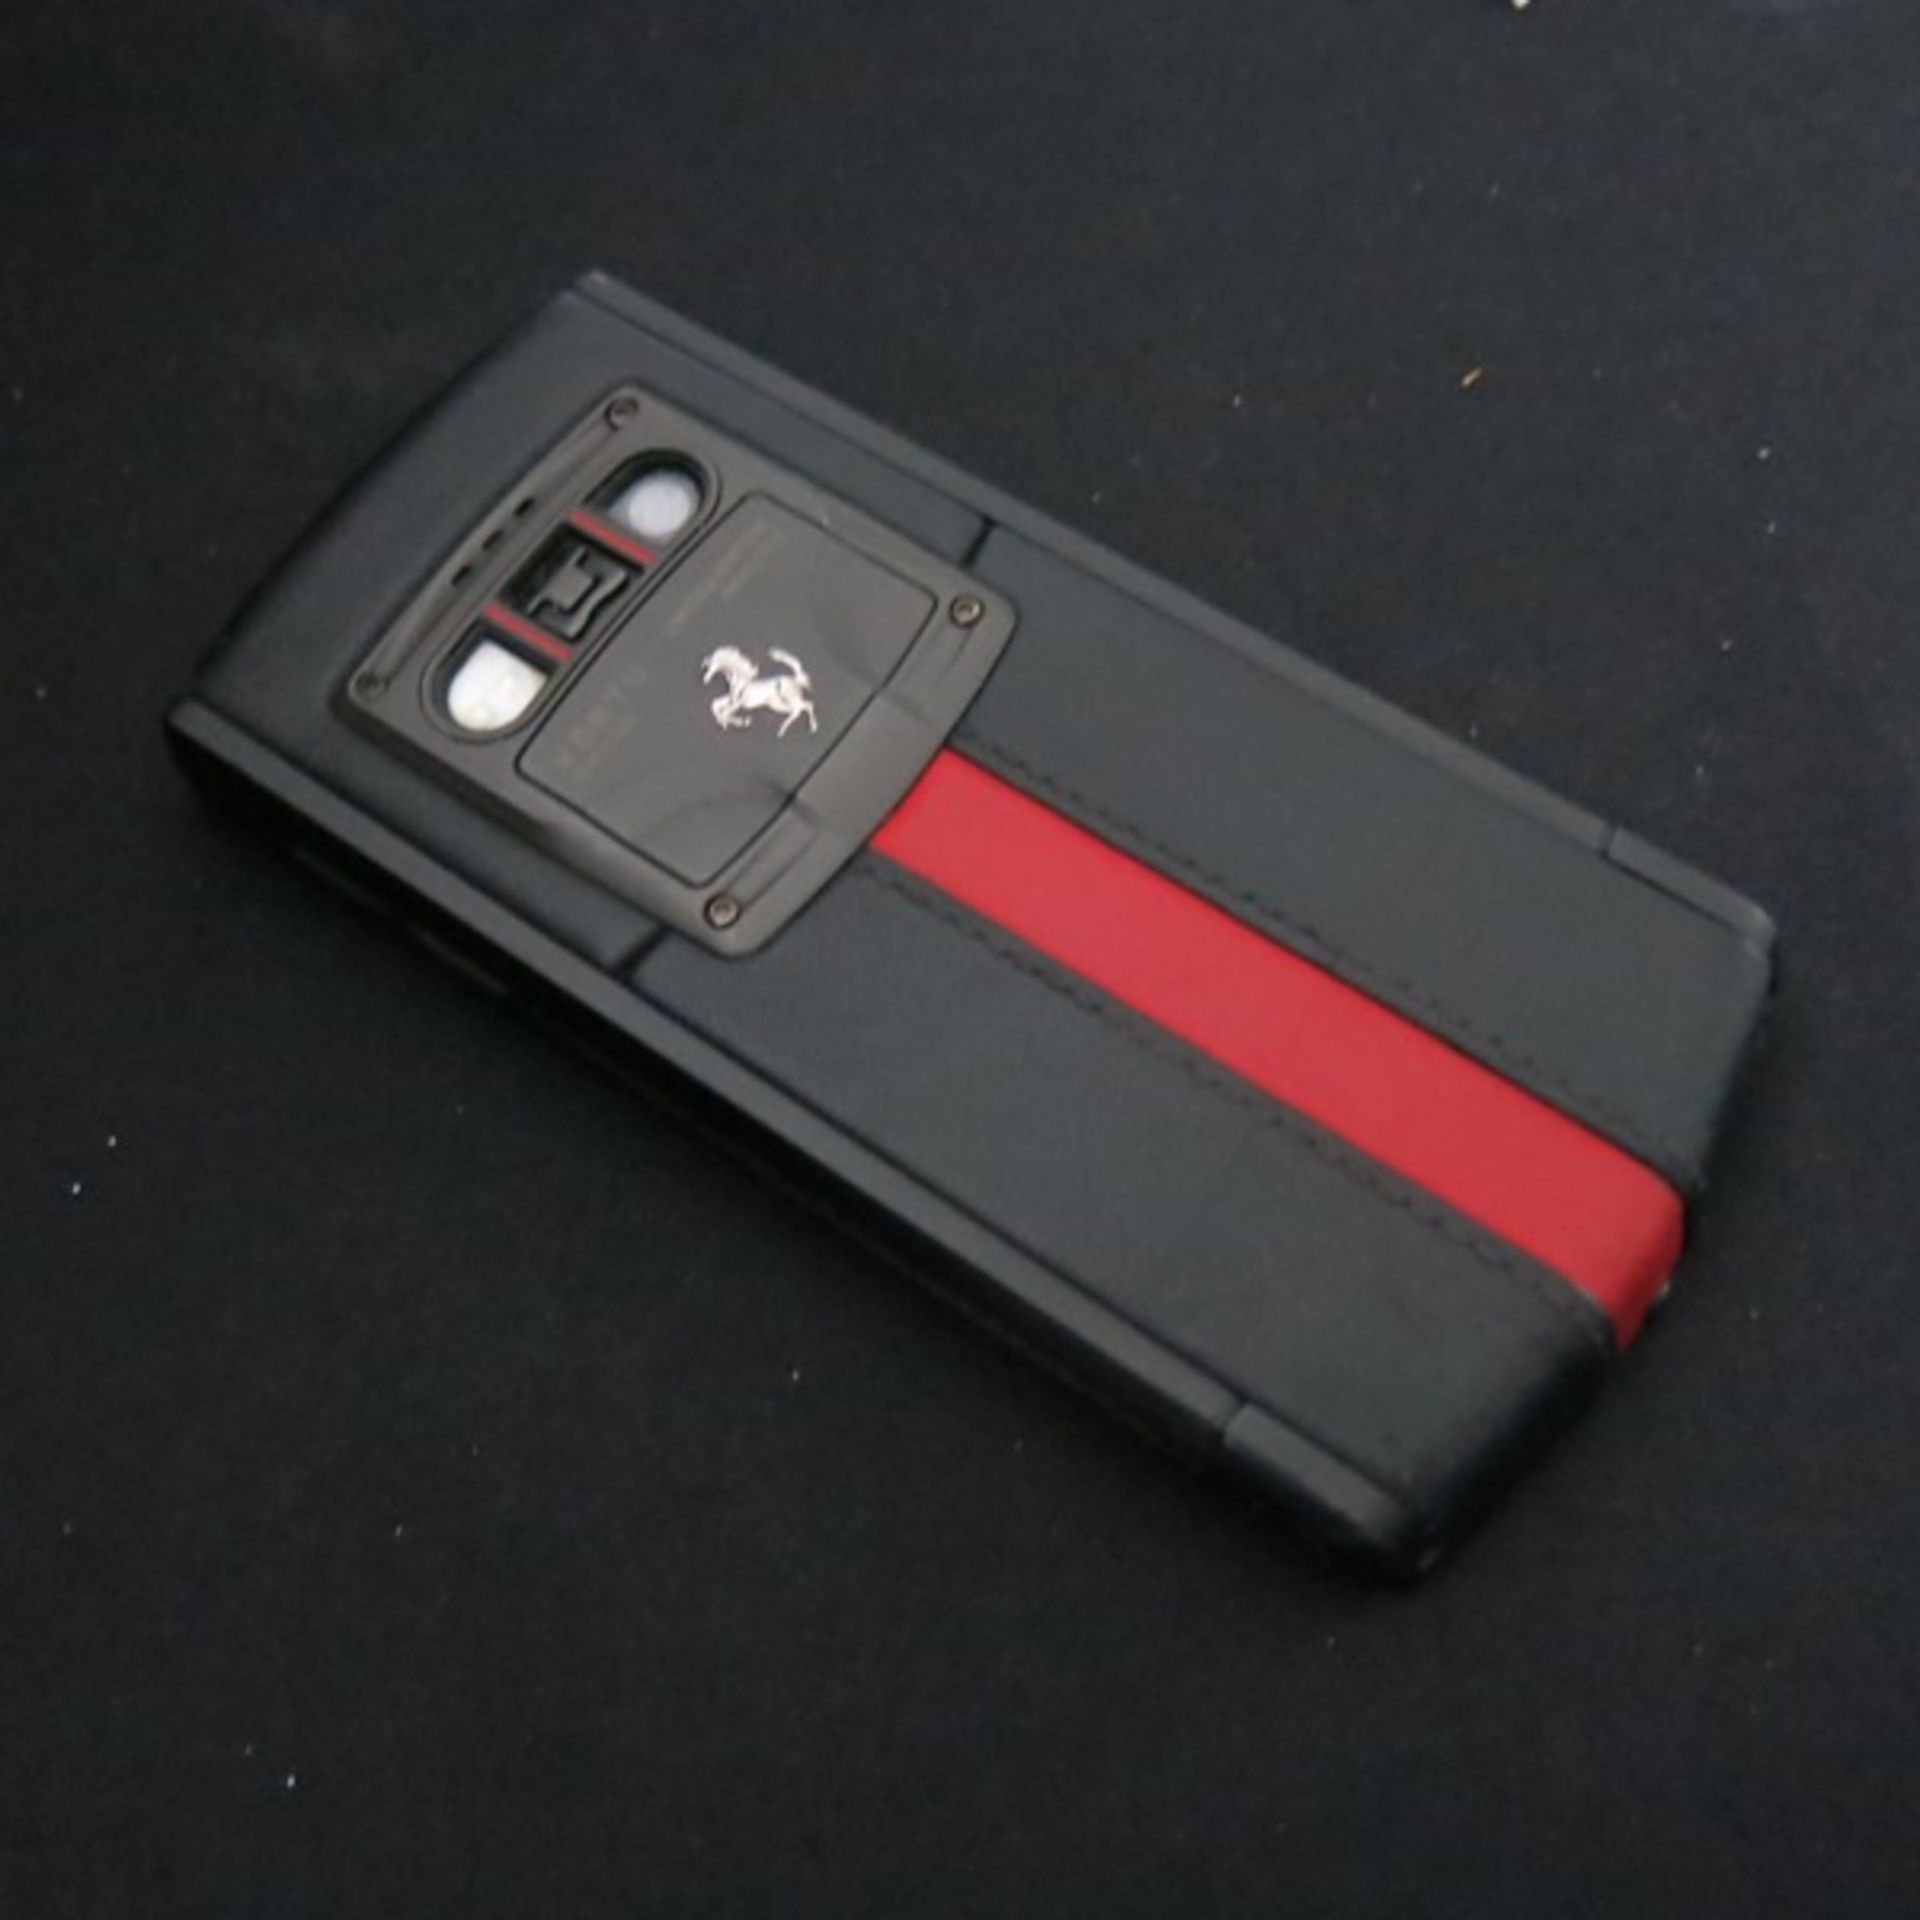 Vertu Ti Ferrari Limited Edition Titanium Phone with Prancing Horse Emblem. Furnished in Red & Black - Image 6 of 8